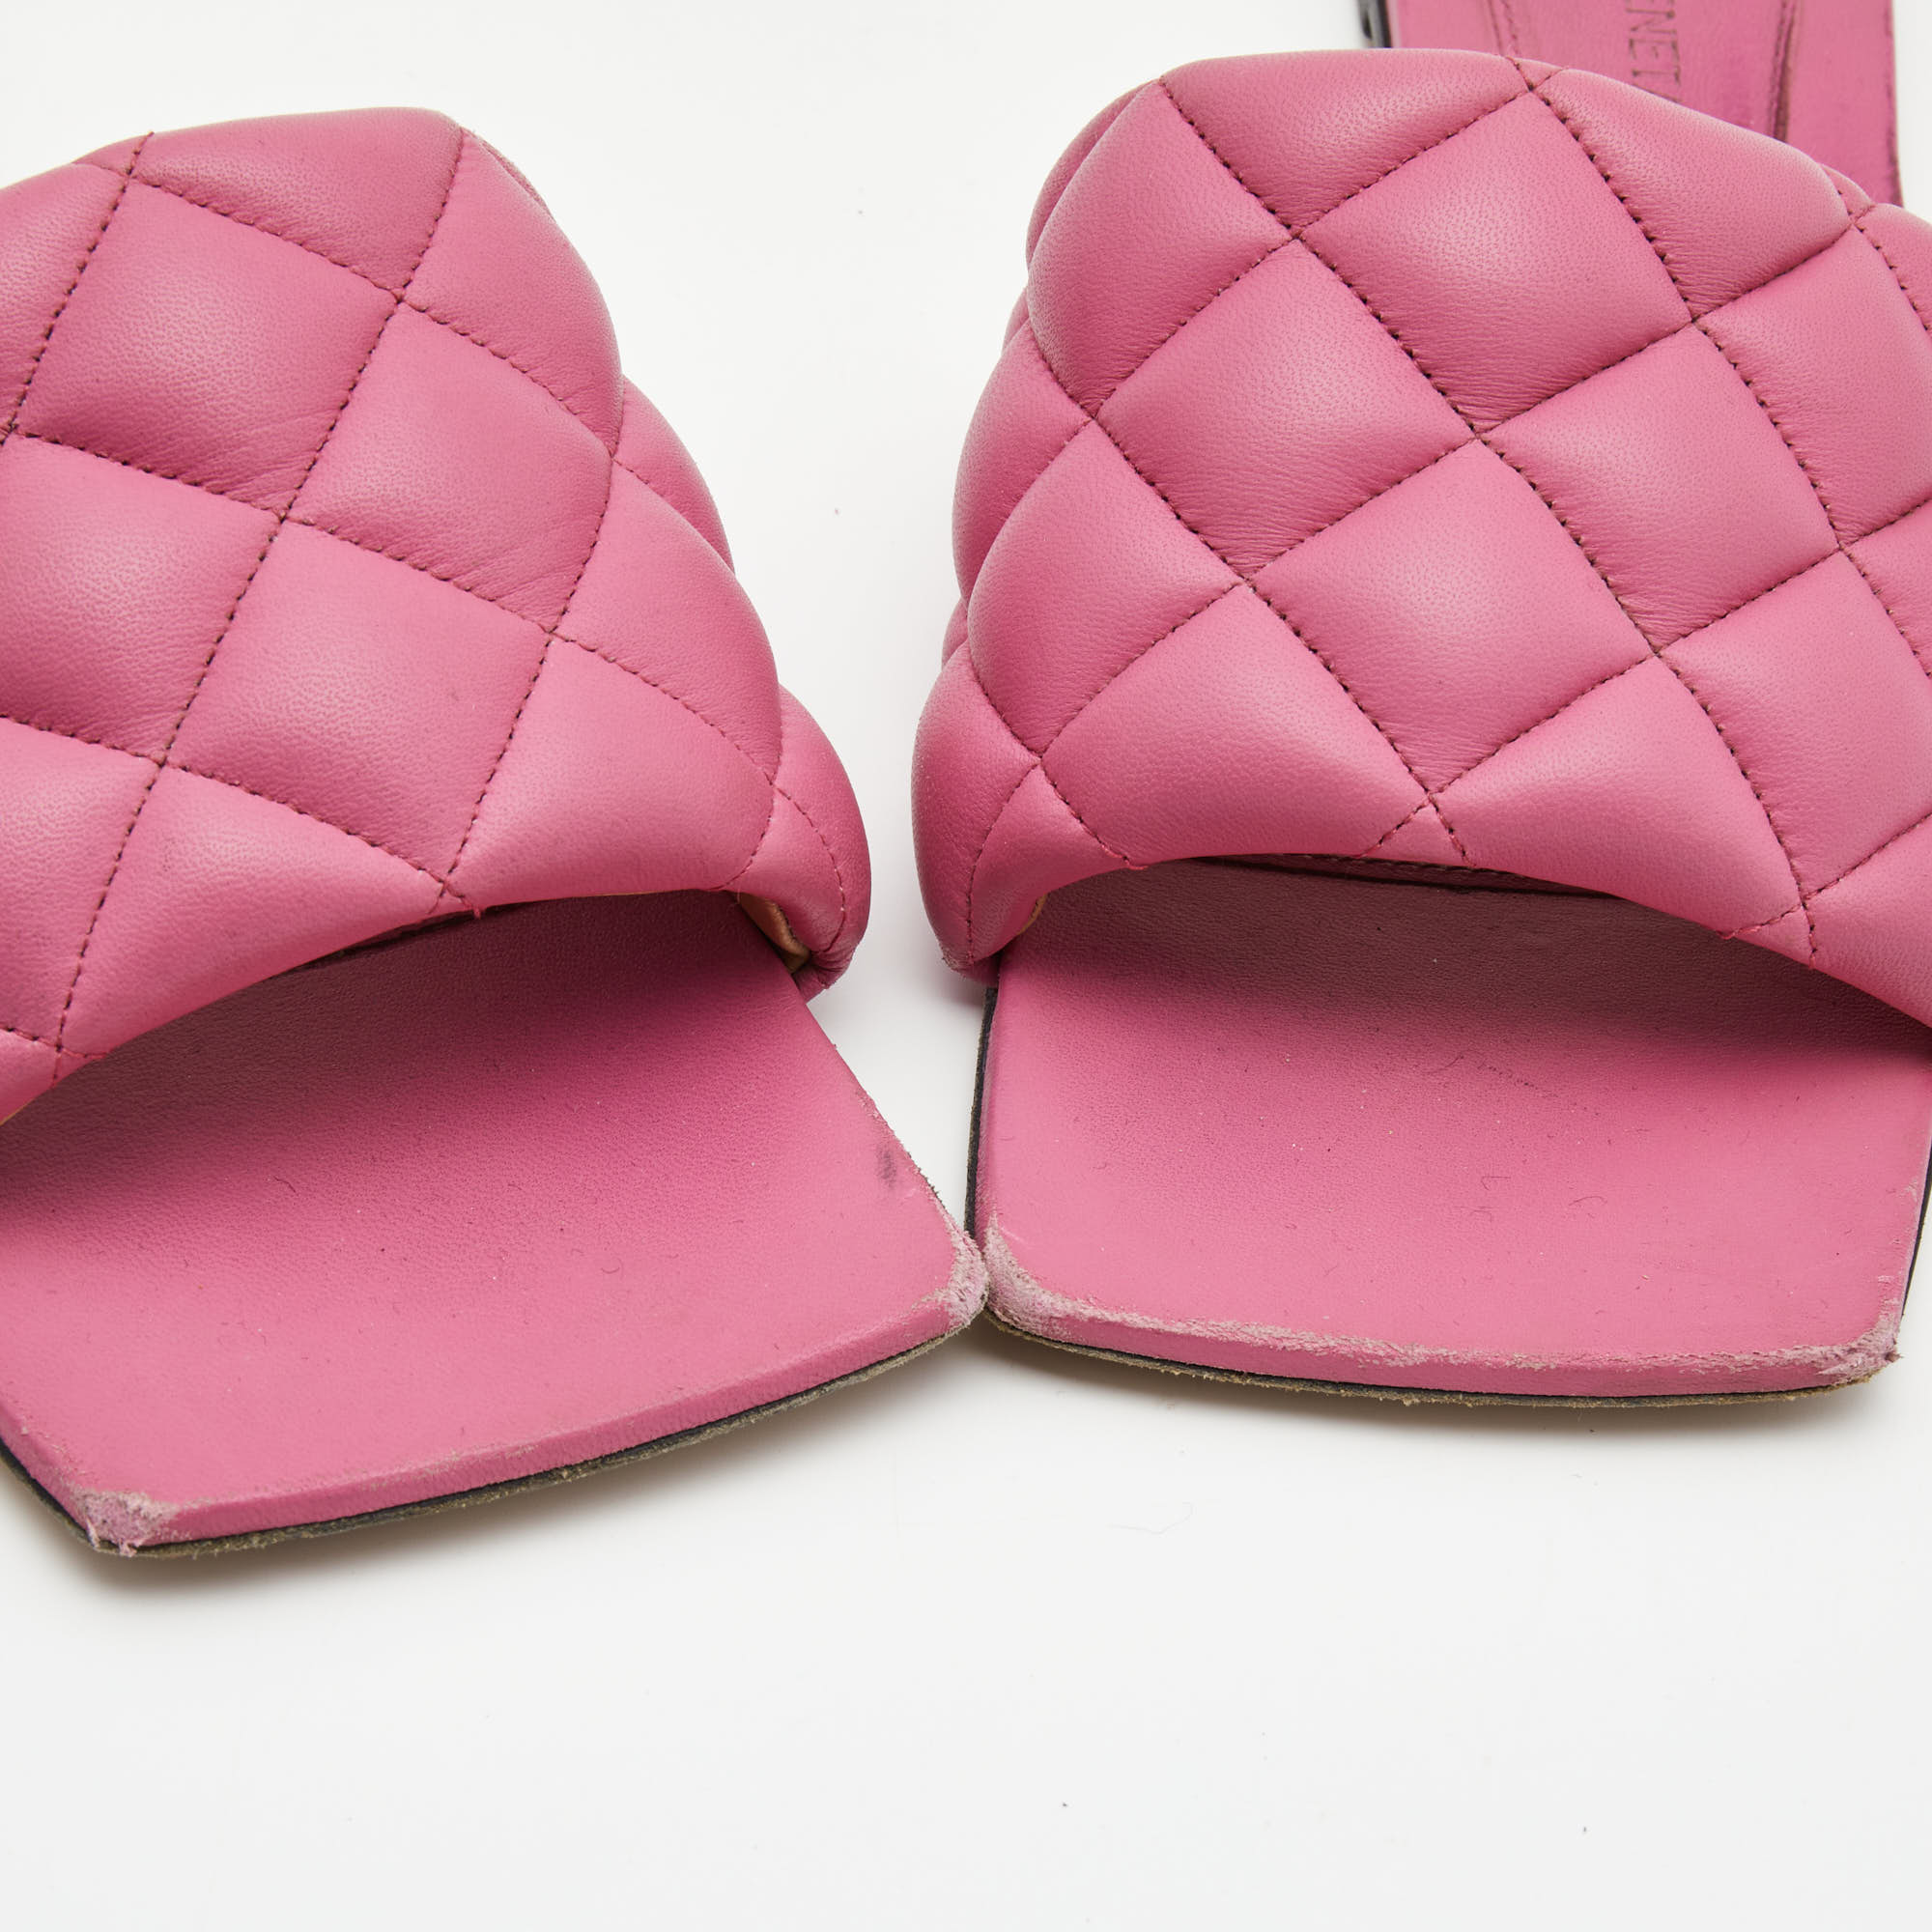 Bottega Veneta Pink Quilted Leather Flat Slides Size 37.5